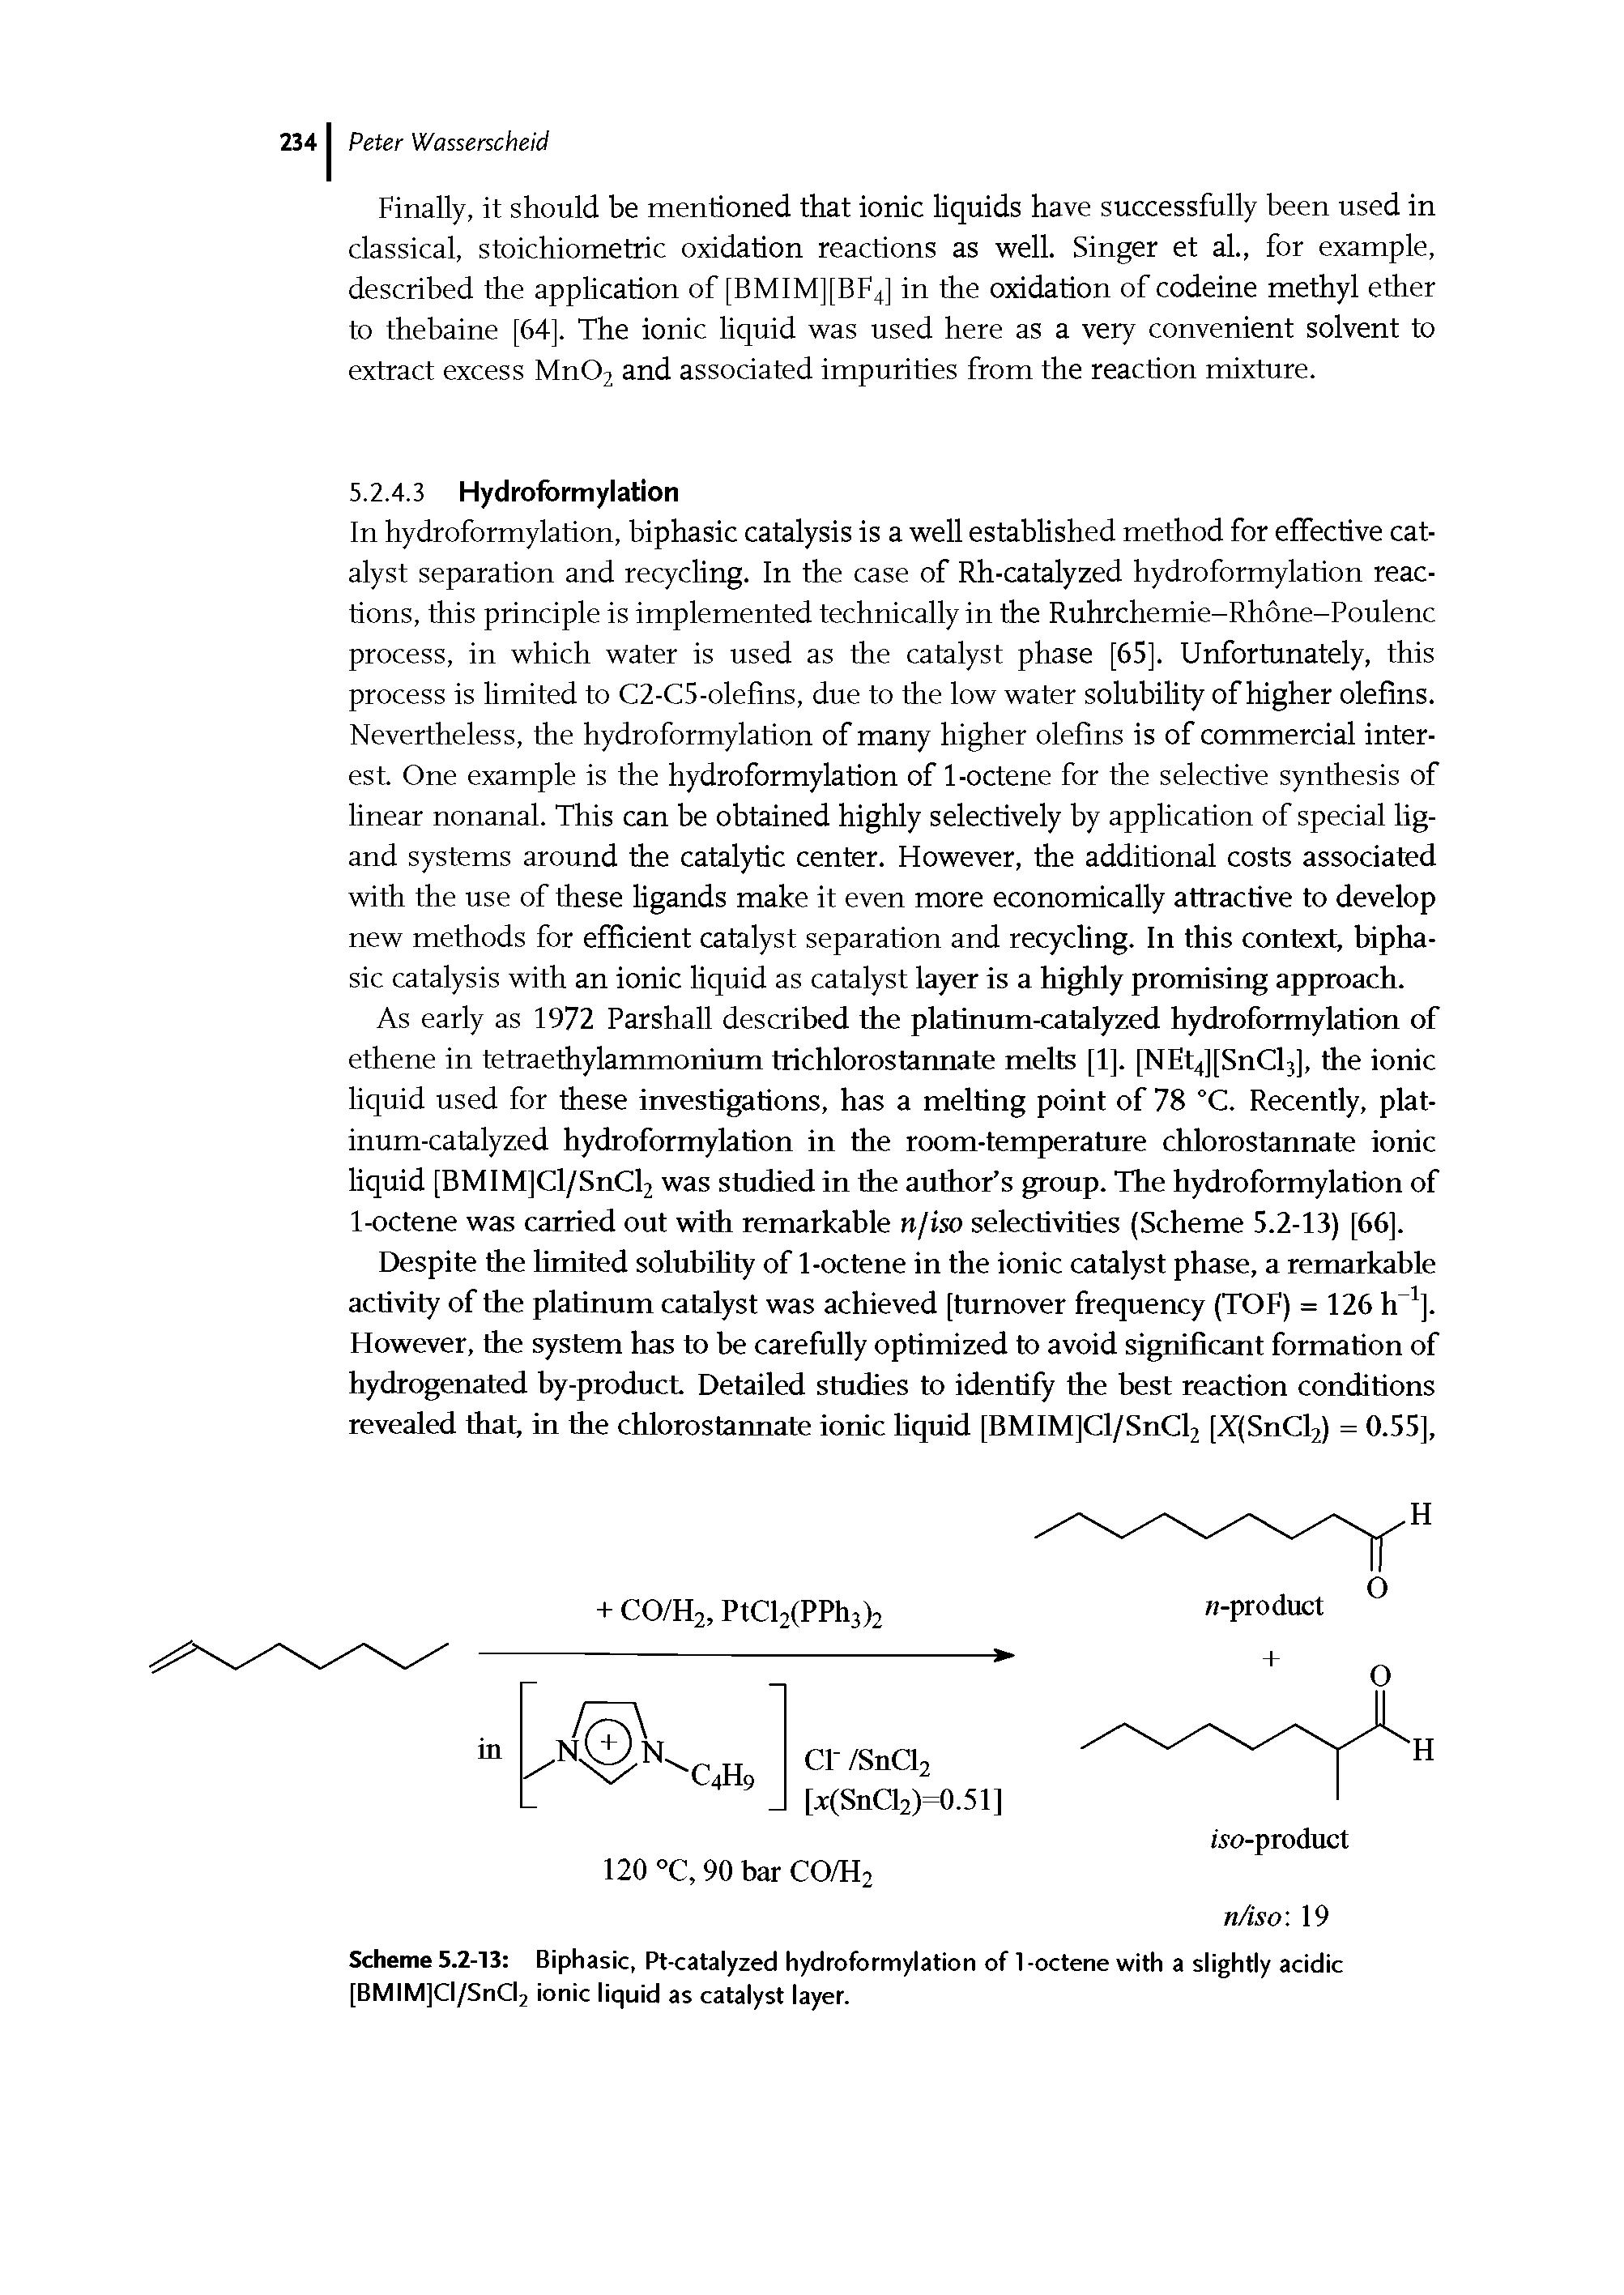 Scheme 5.2-13 Biphasic, Pt-catalyzed hydroformylation of 1-octene with a slightly acidic [BMIMJCI/SnClj ionic liquid as catalyst layer.